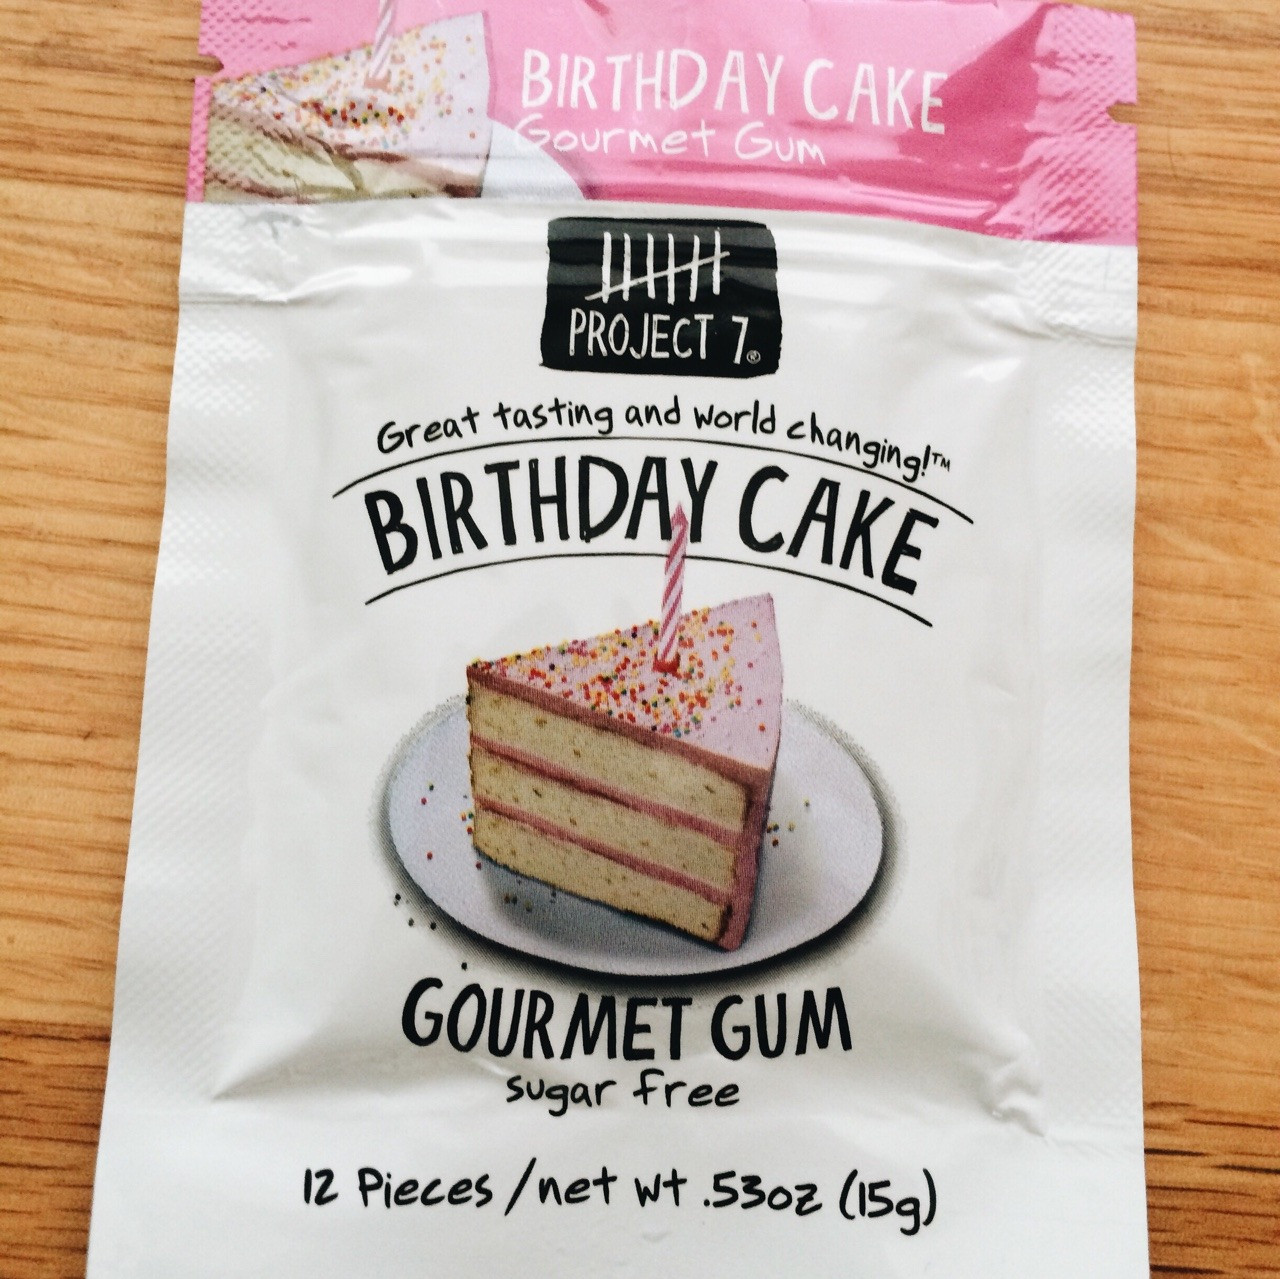 Birthday Cake Gourmet Gum
 Gumblr